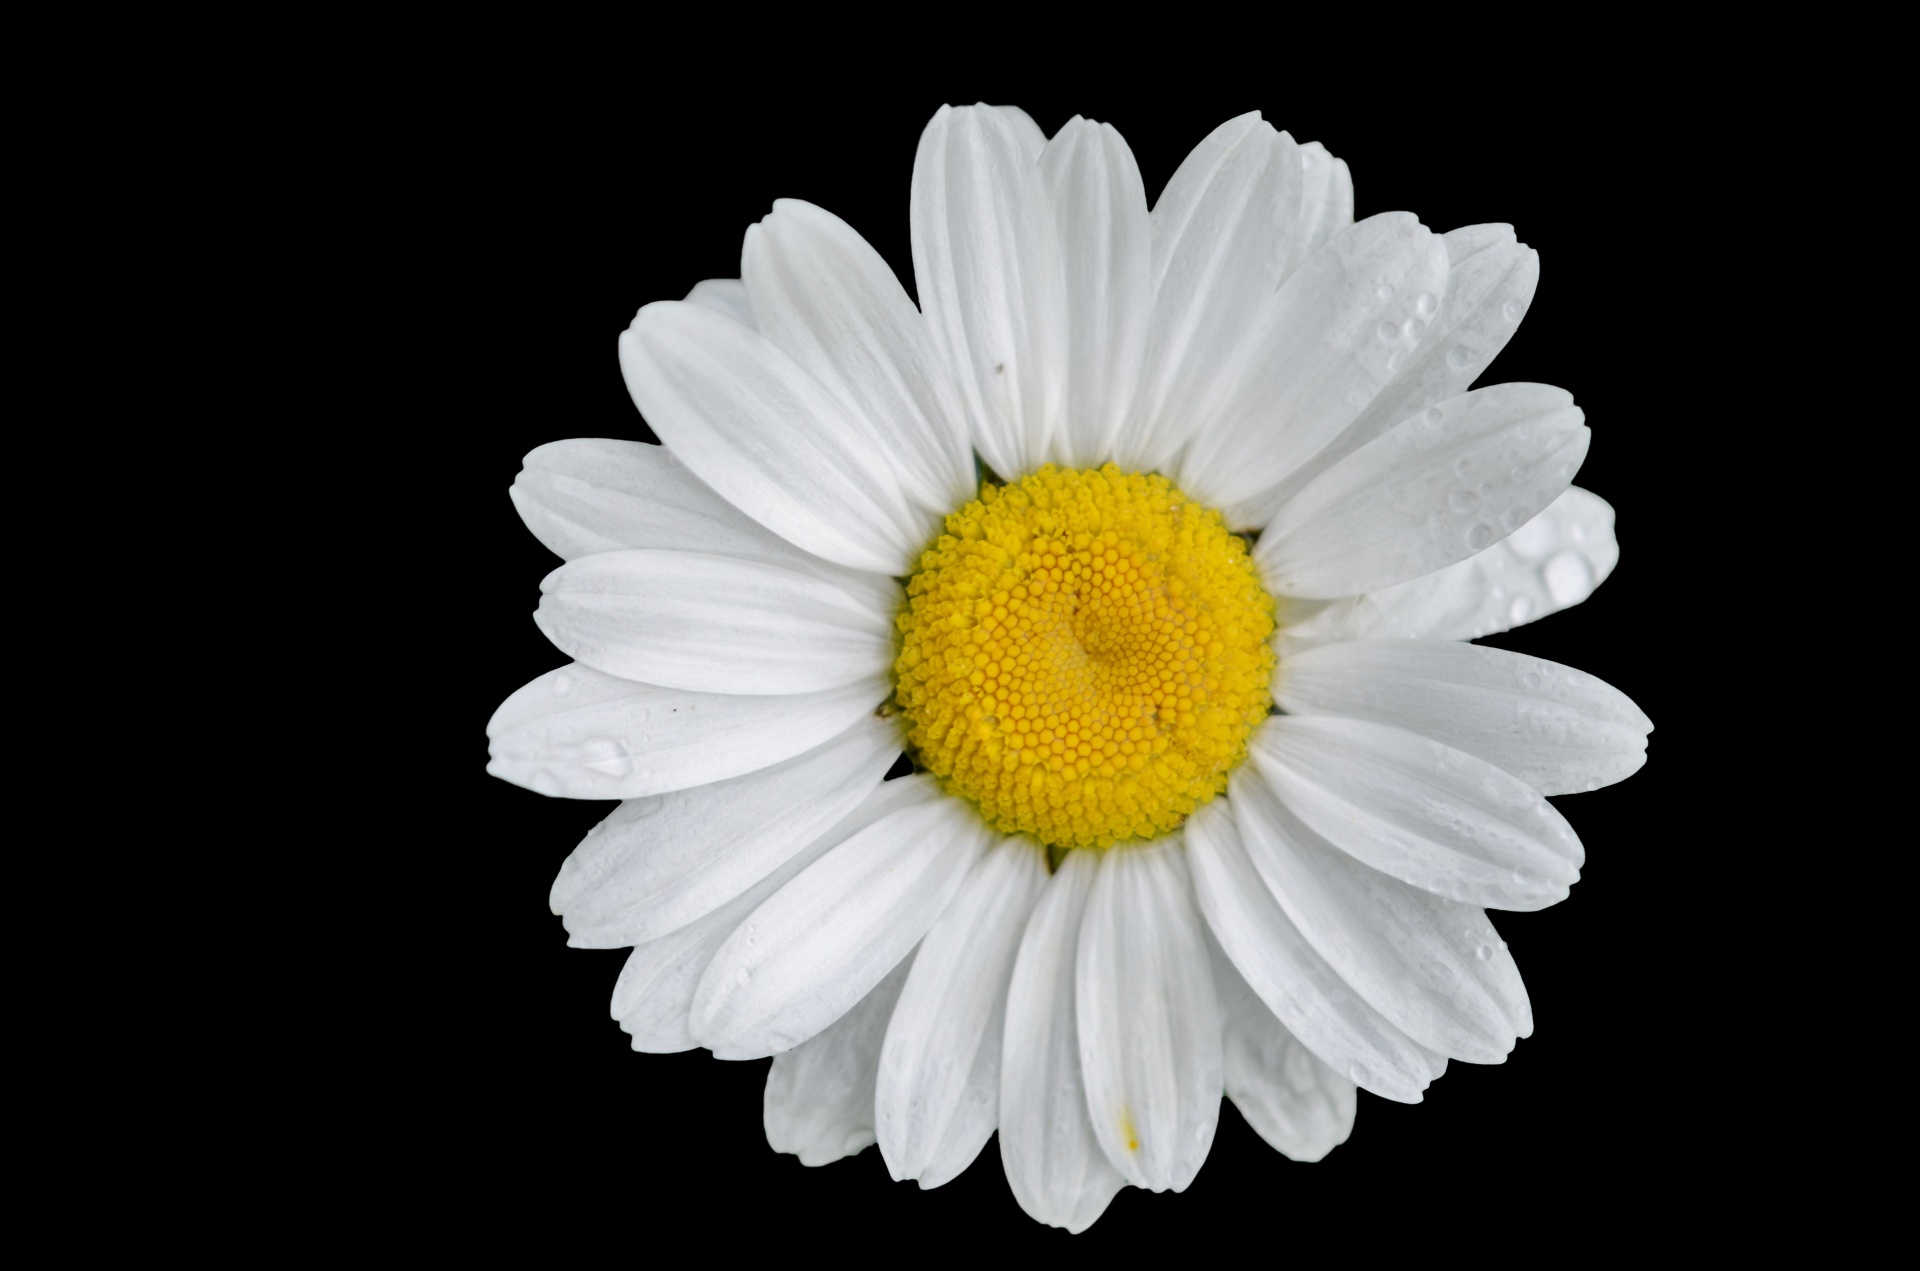 White daisy flower on black background